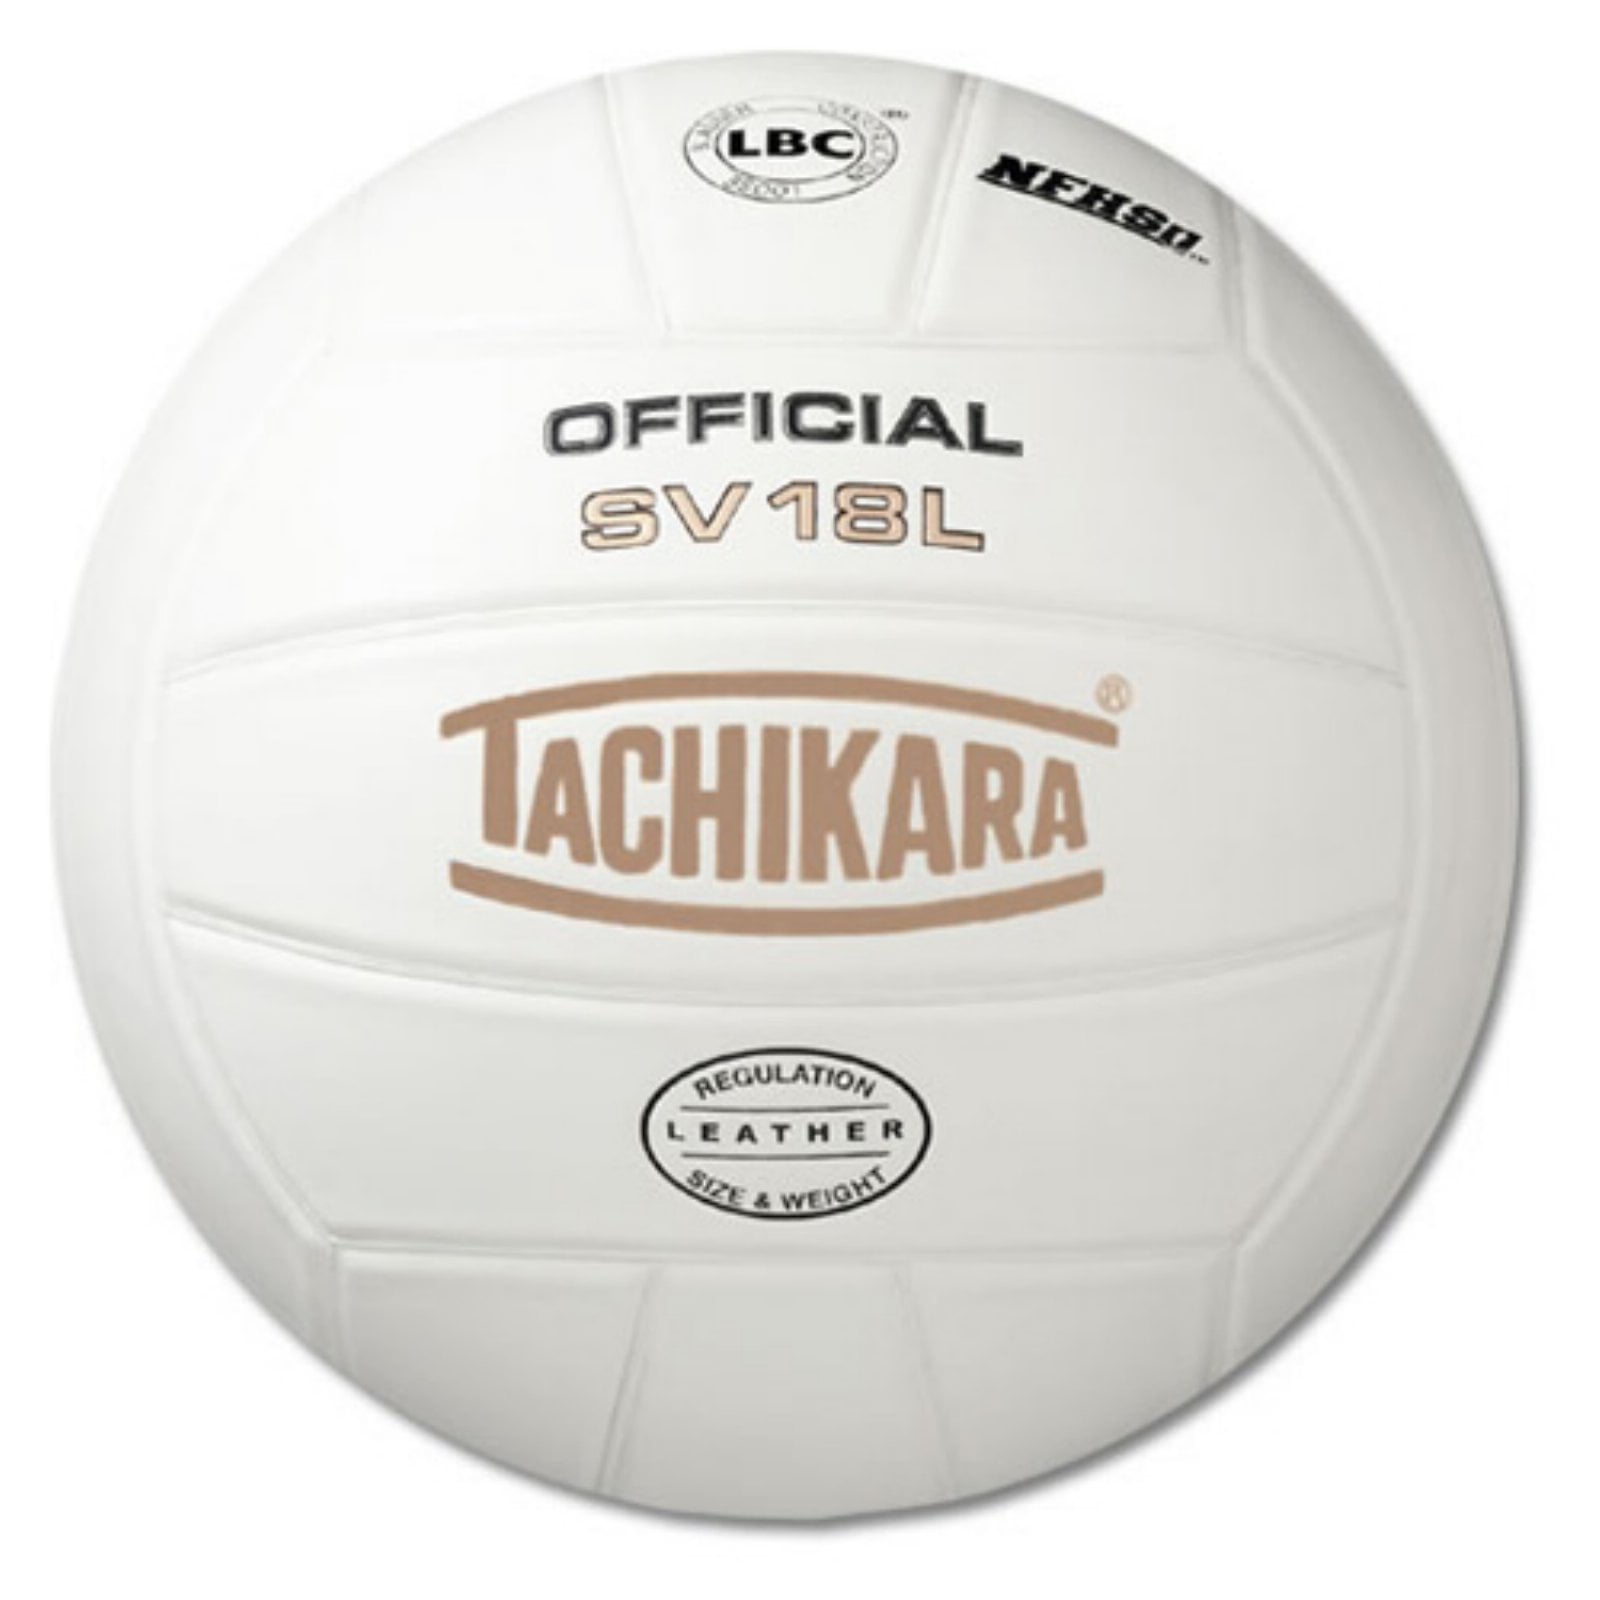 Tachikara SV18L Leather Cover Volleyball - Walmart.com - Walmart.com